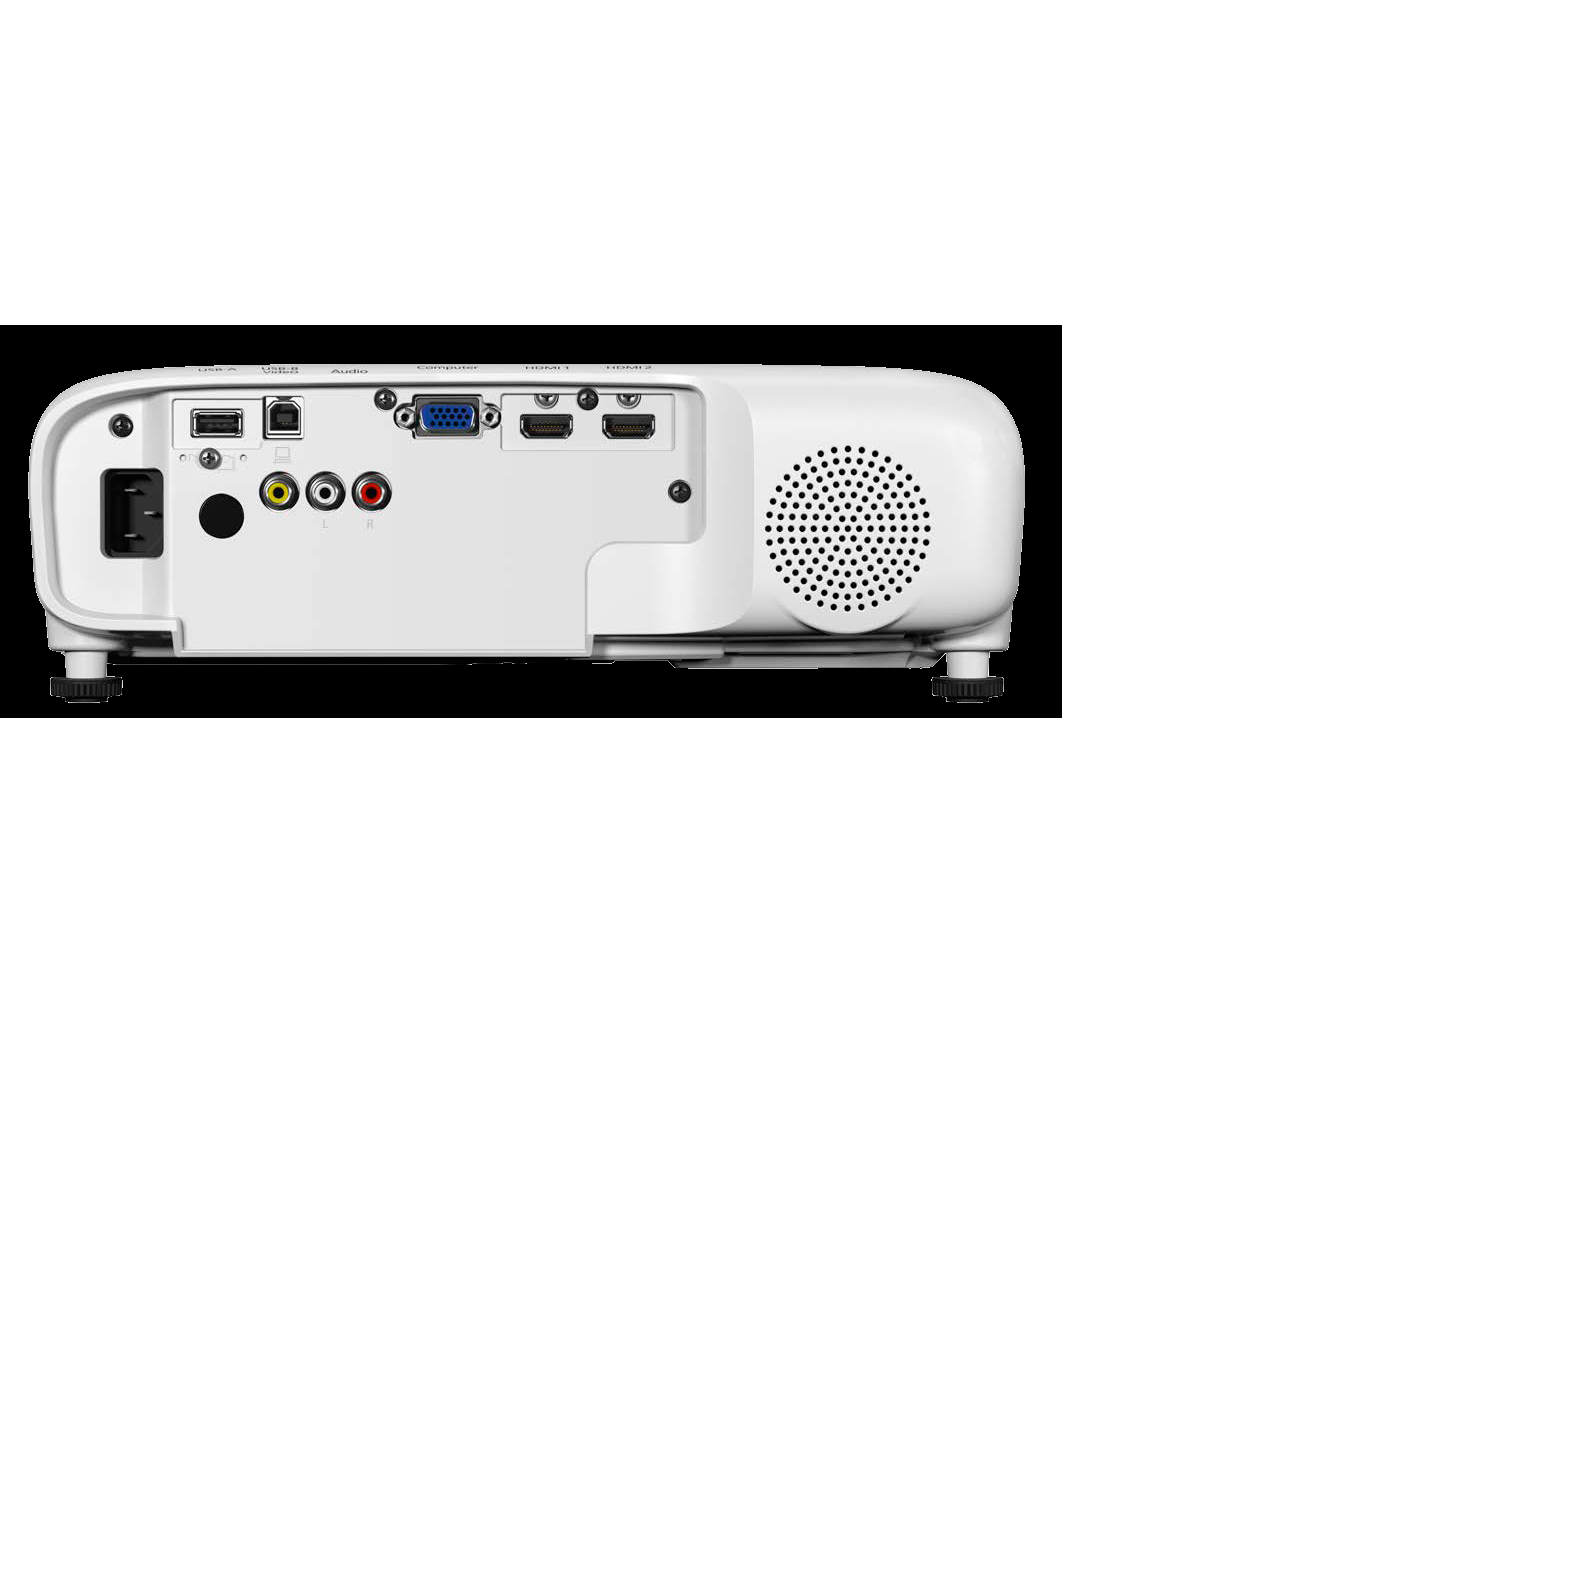 Epson - EB-FH52 -Full HD Projector Australia